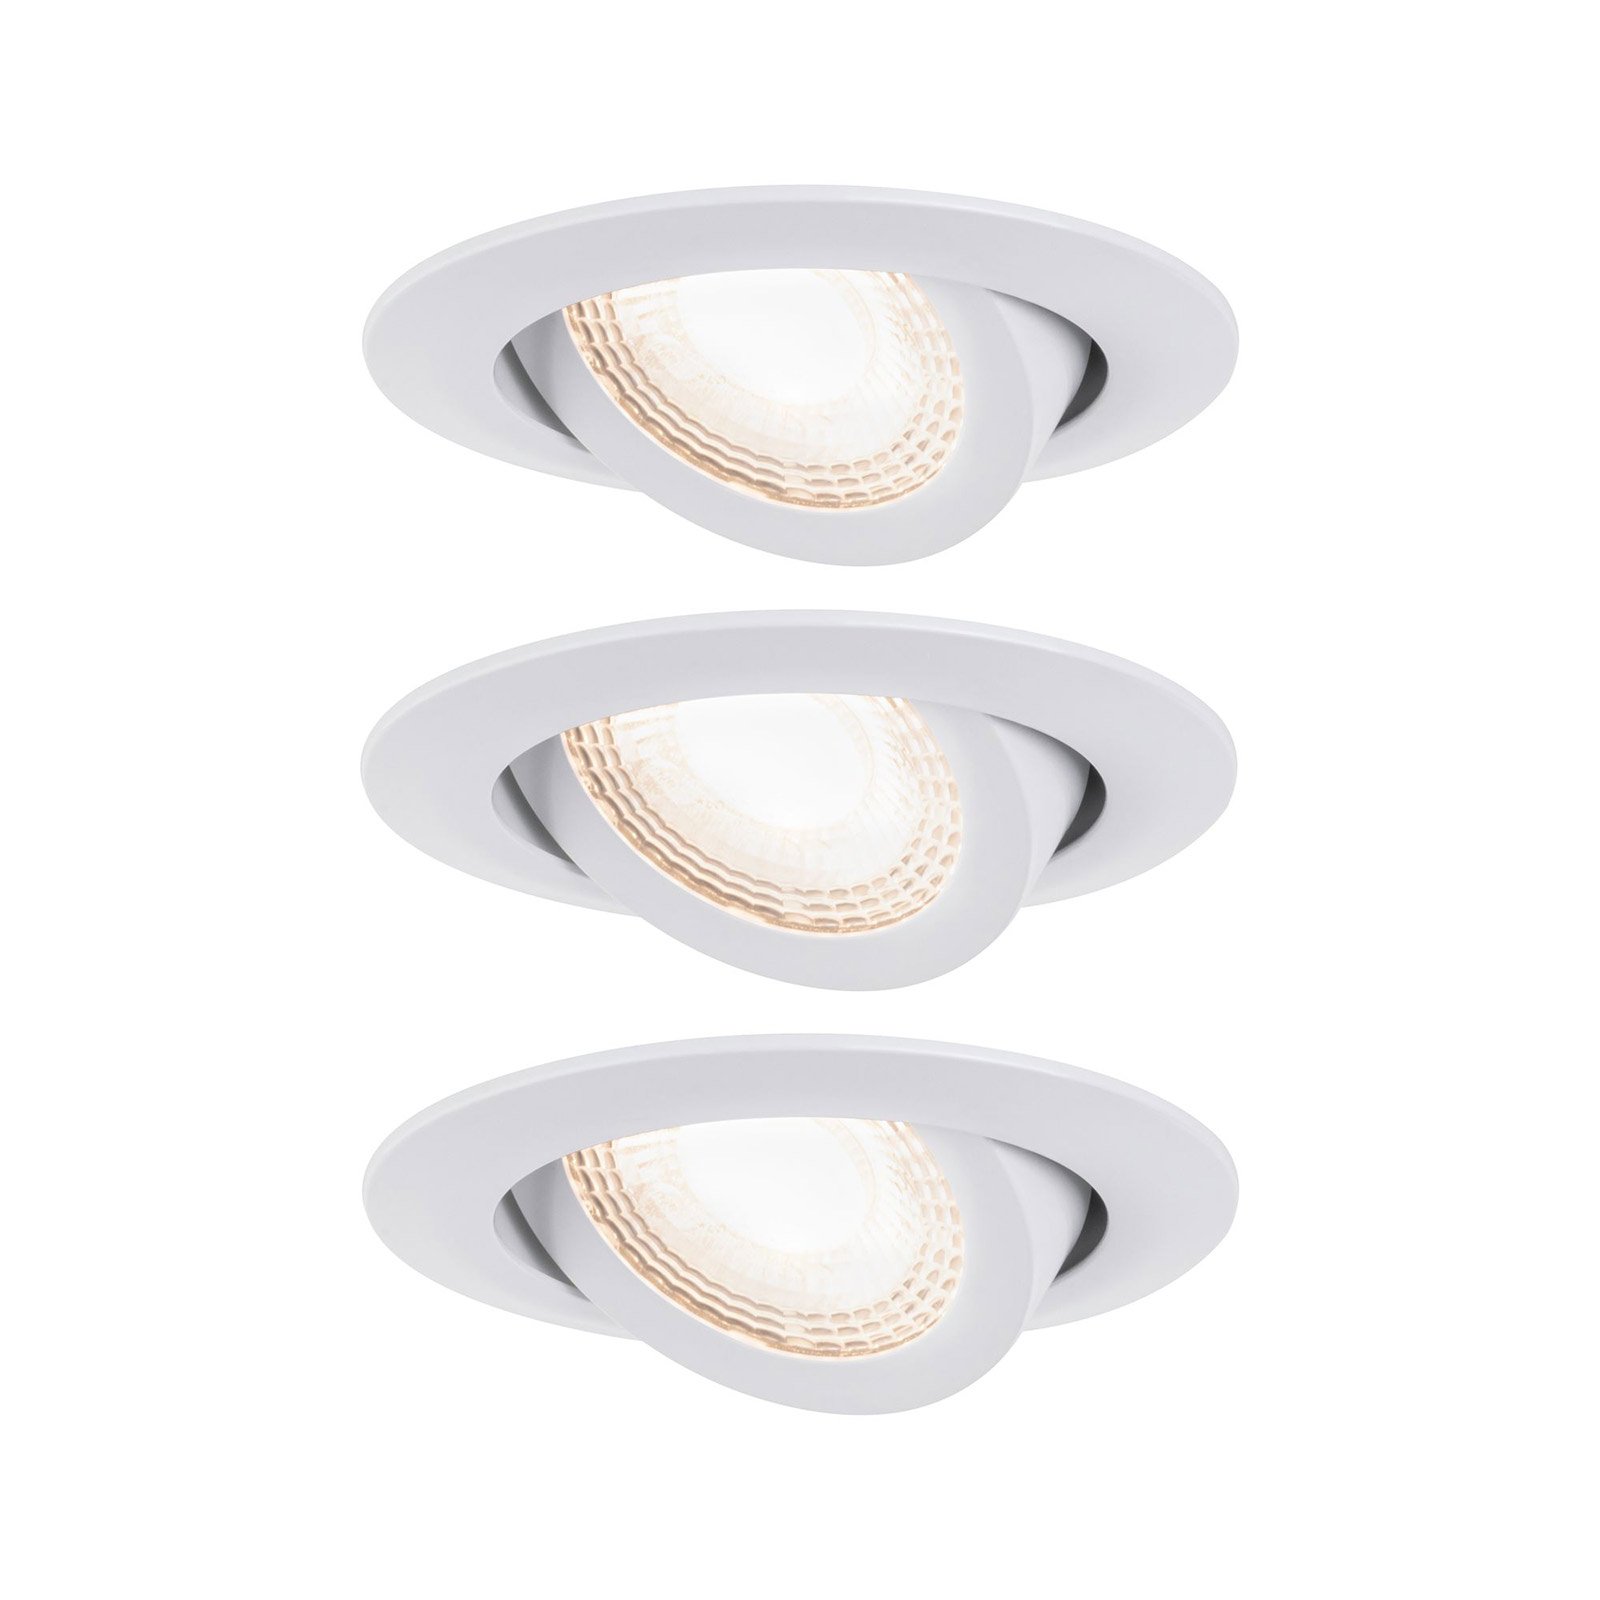 Paulmann LED-Einbaulampe 93388, Set 3 x 4,8W, weiß